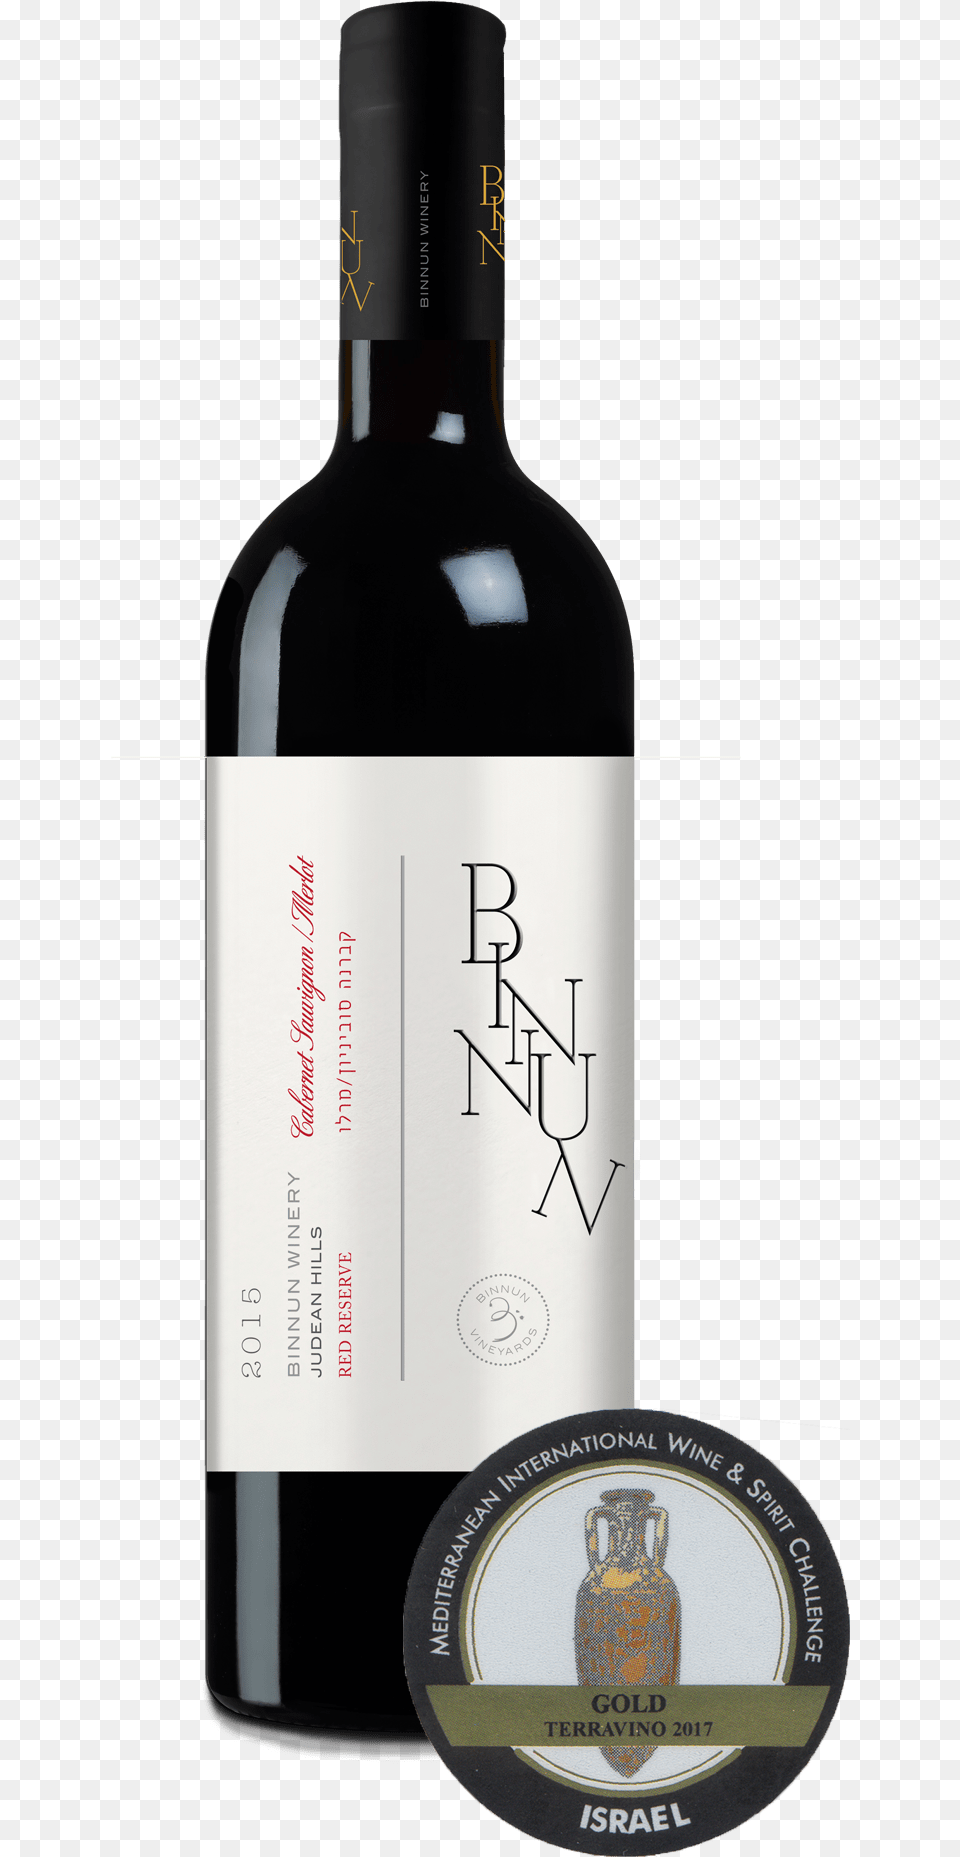 Red Reserve Bin Nun Wine, Alcohol, Liquor, Bottle, Wine Bottle Png